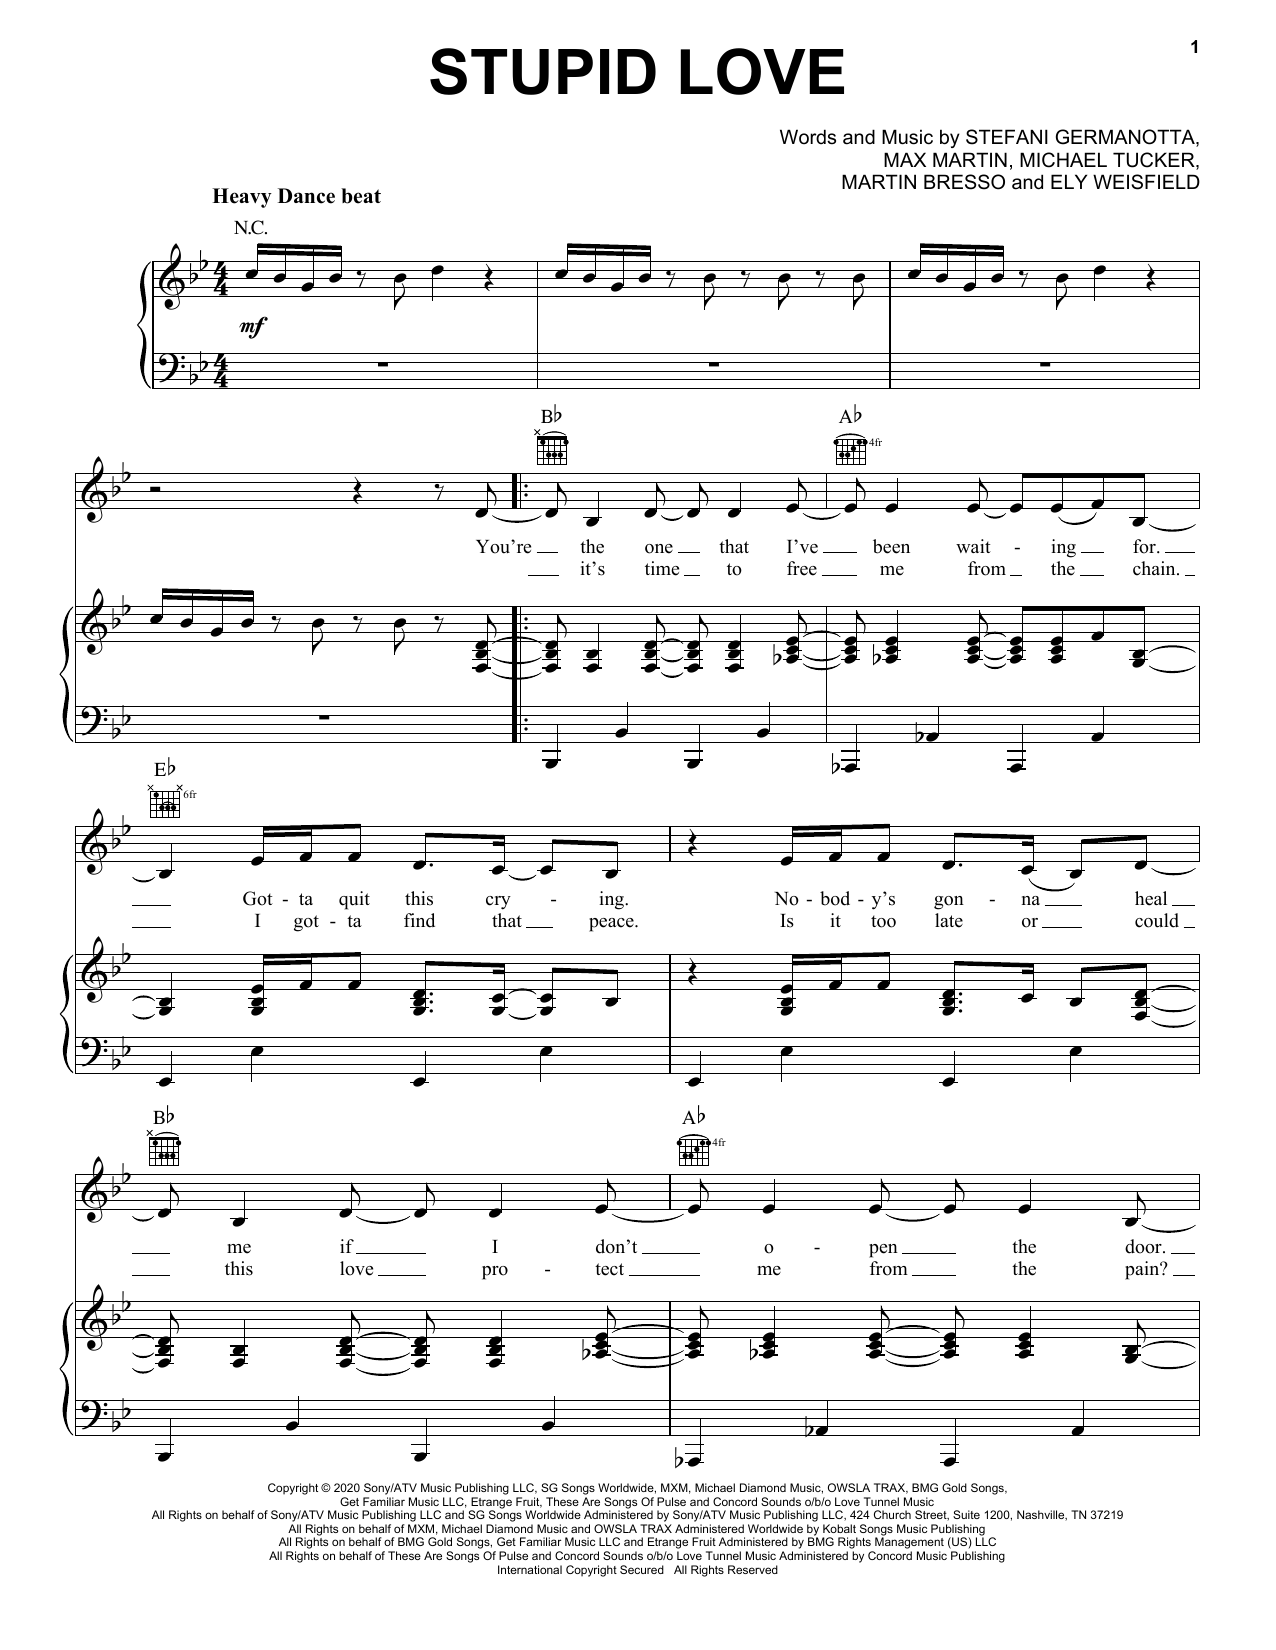 Lady Gaga Stupid Love Sheet Music Notes & Chords for Lead Sheet / Fake Book - Download or Print PDF